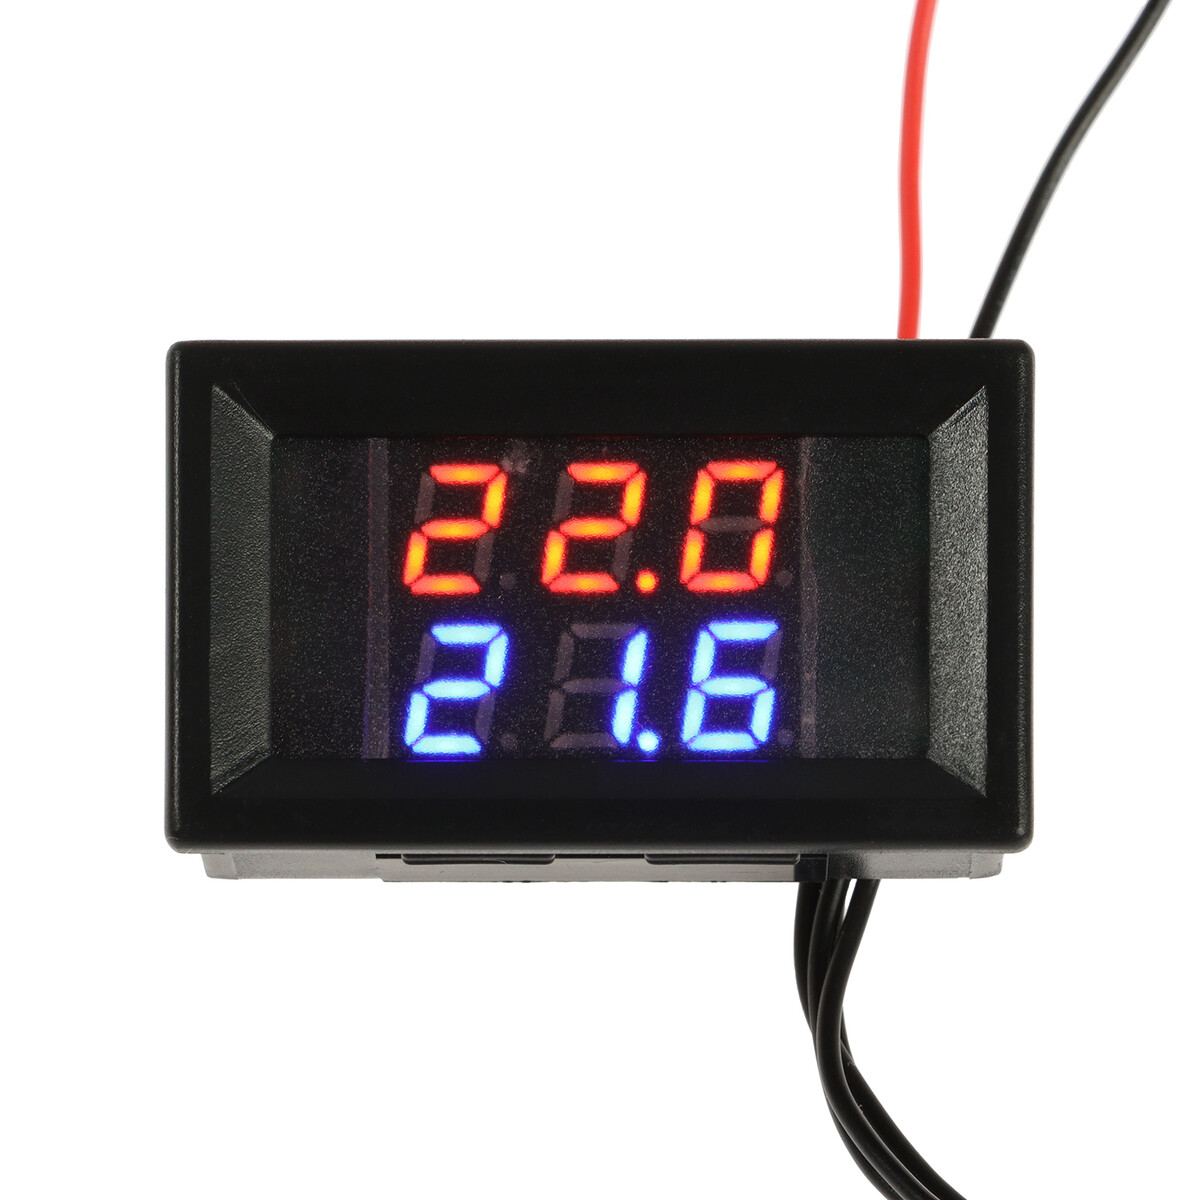 Термометр цифровой, жк-экран, провод 1.5 м, 45×26 мм, -20-100 °c кулинарный термометр для духовки accura цифровой с таймером